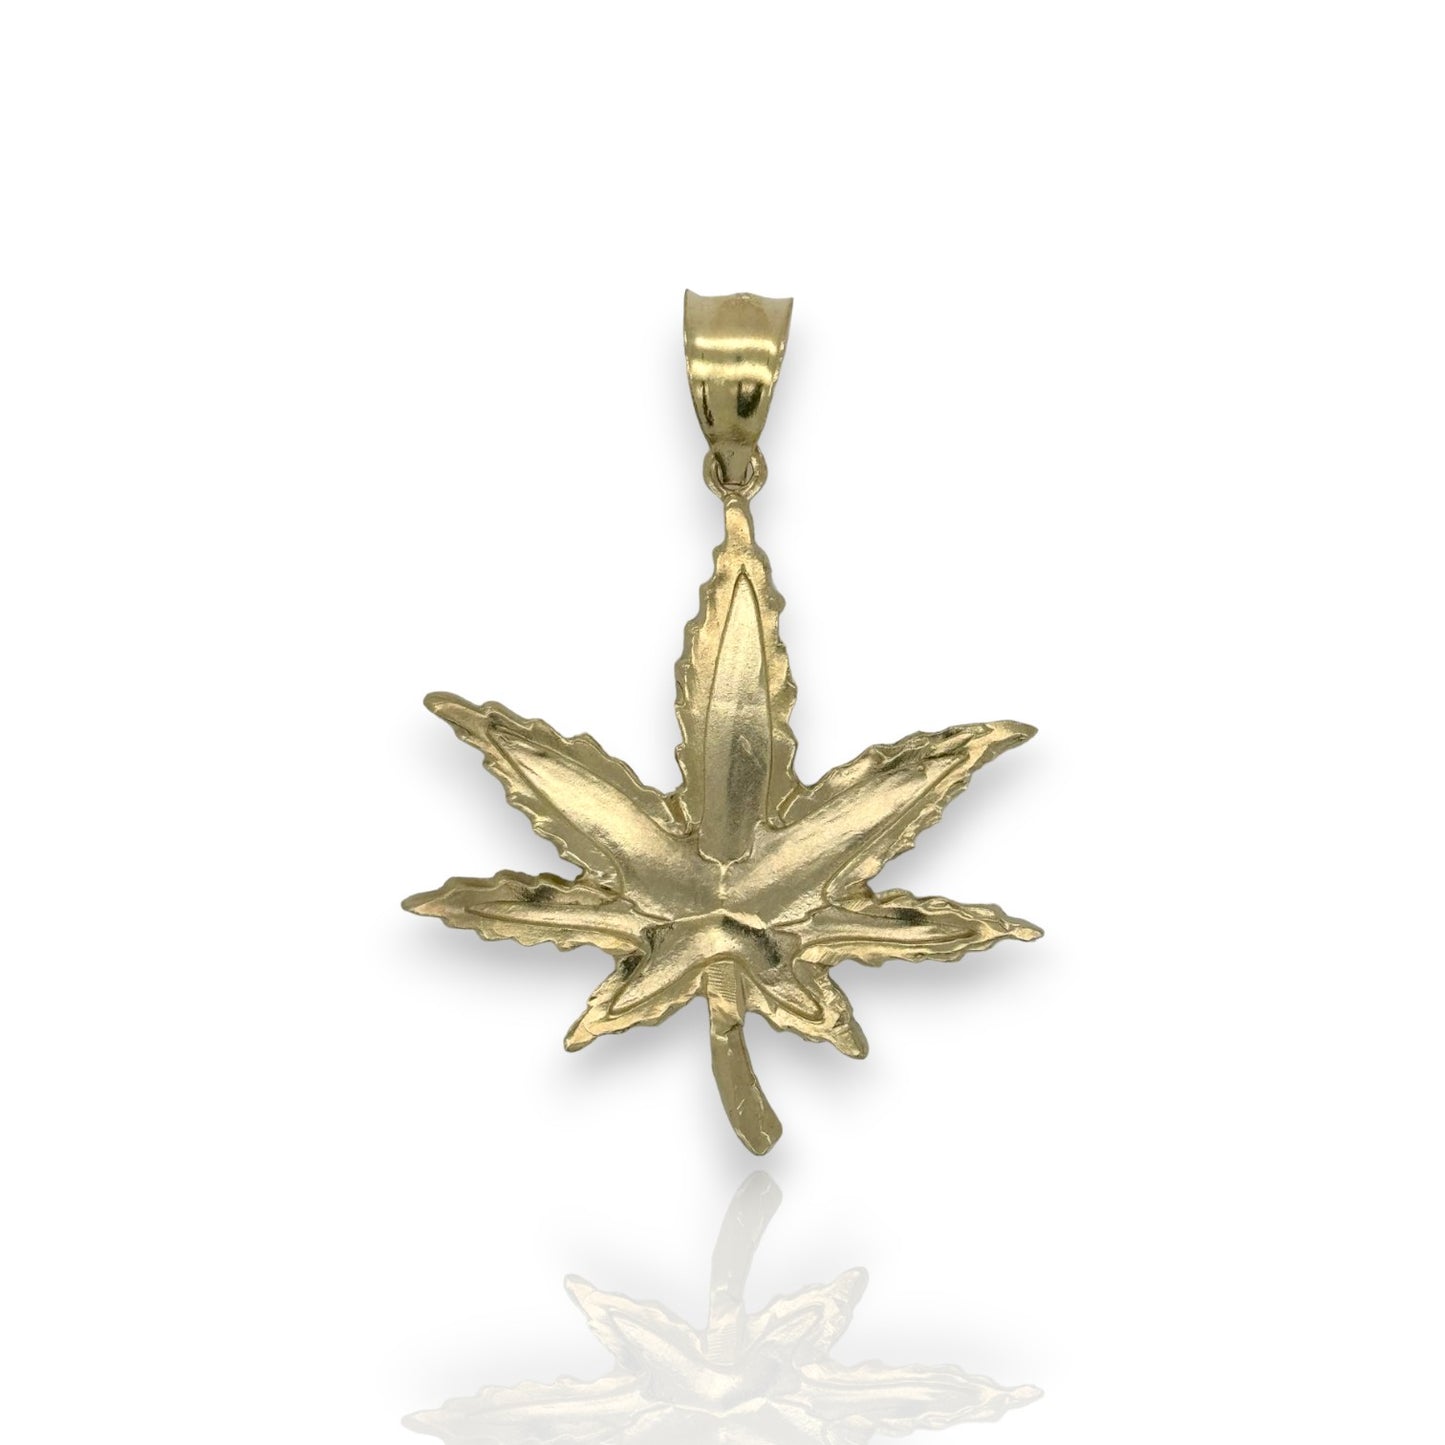 Marijuana "Weed" Pendant - 10k Yellow Gold